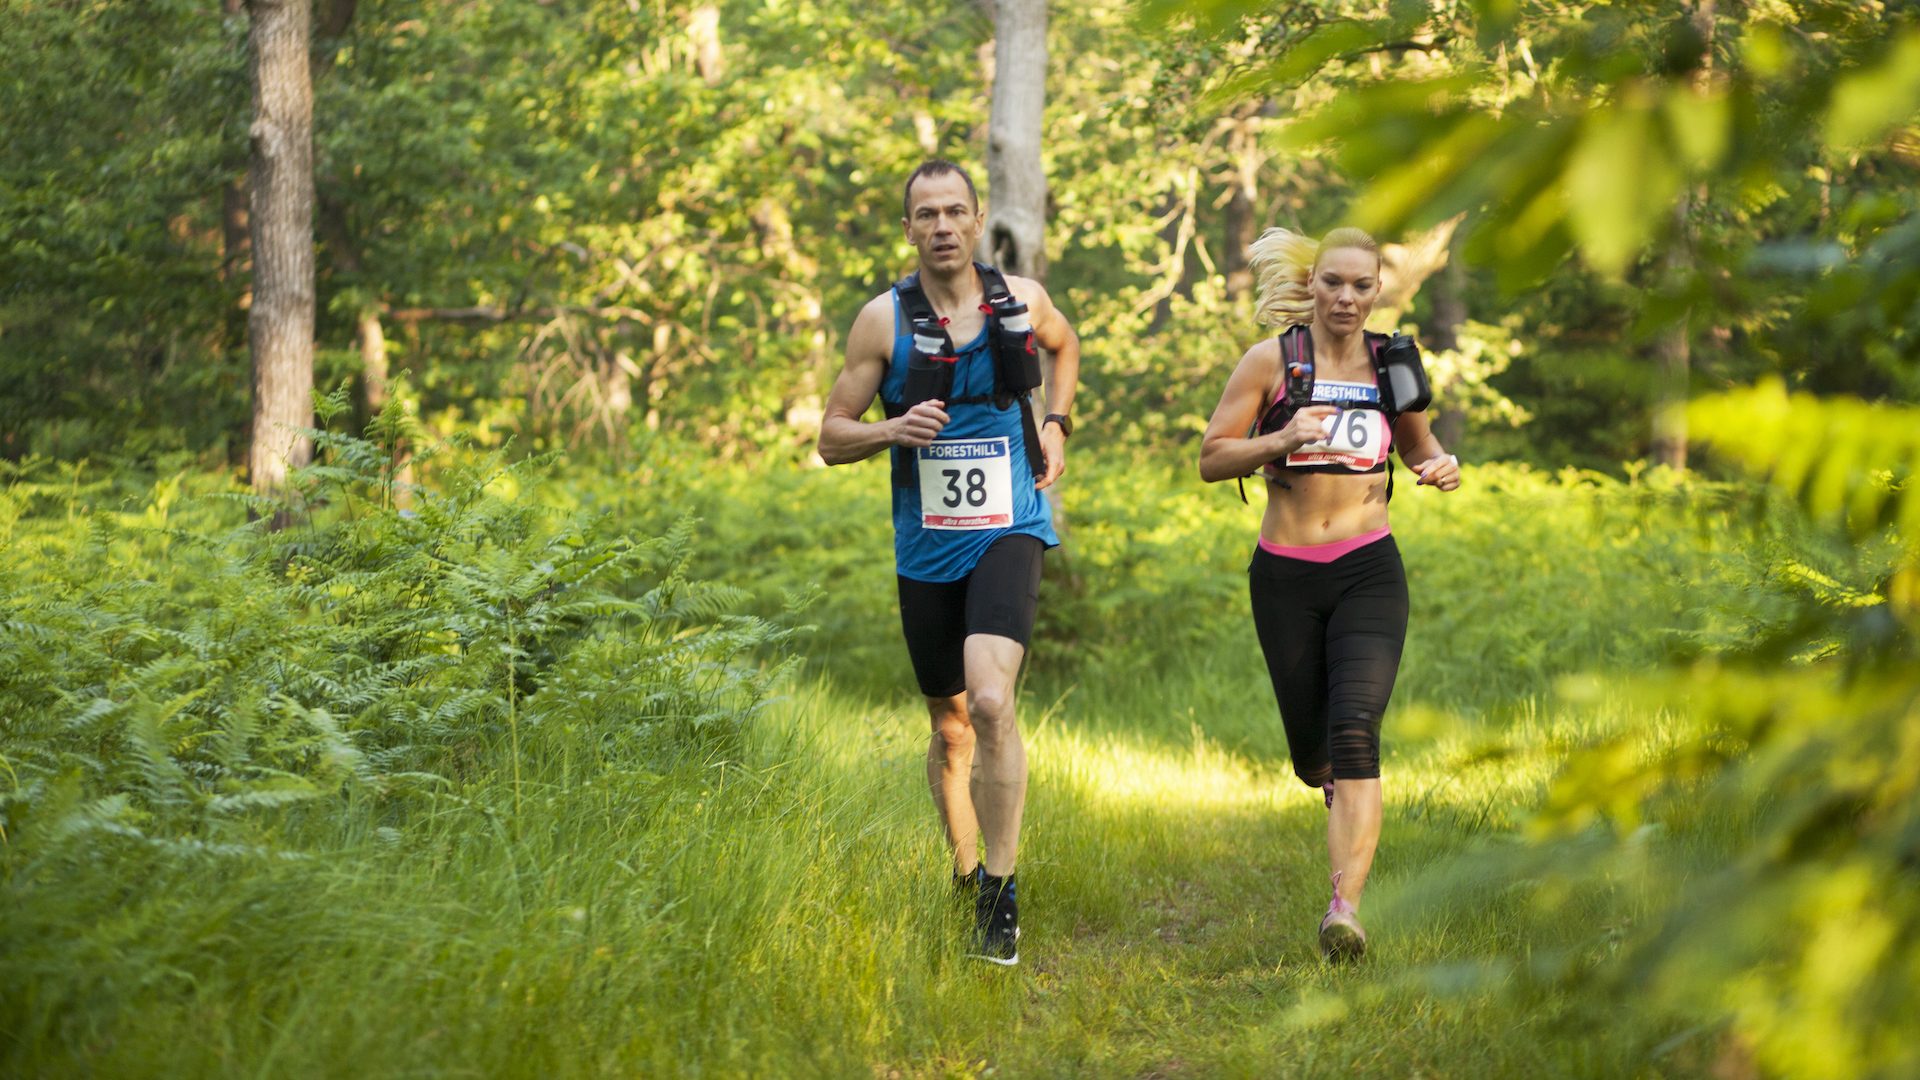 Women in trail running: why do far fewer women take part in races than men?